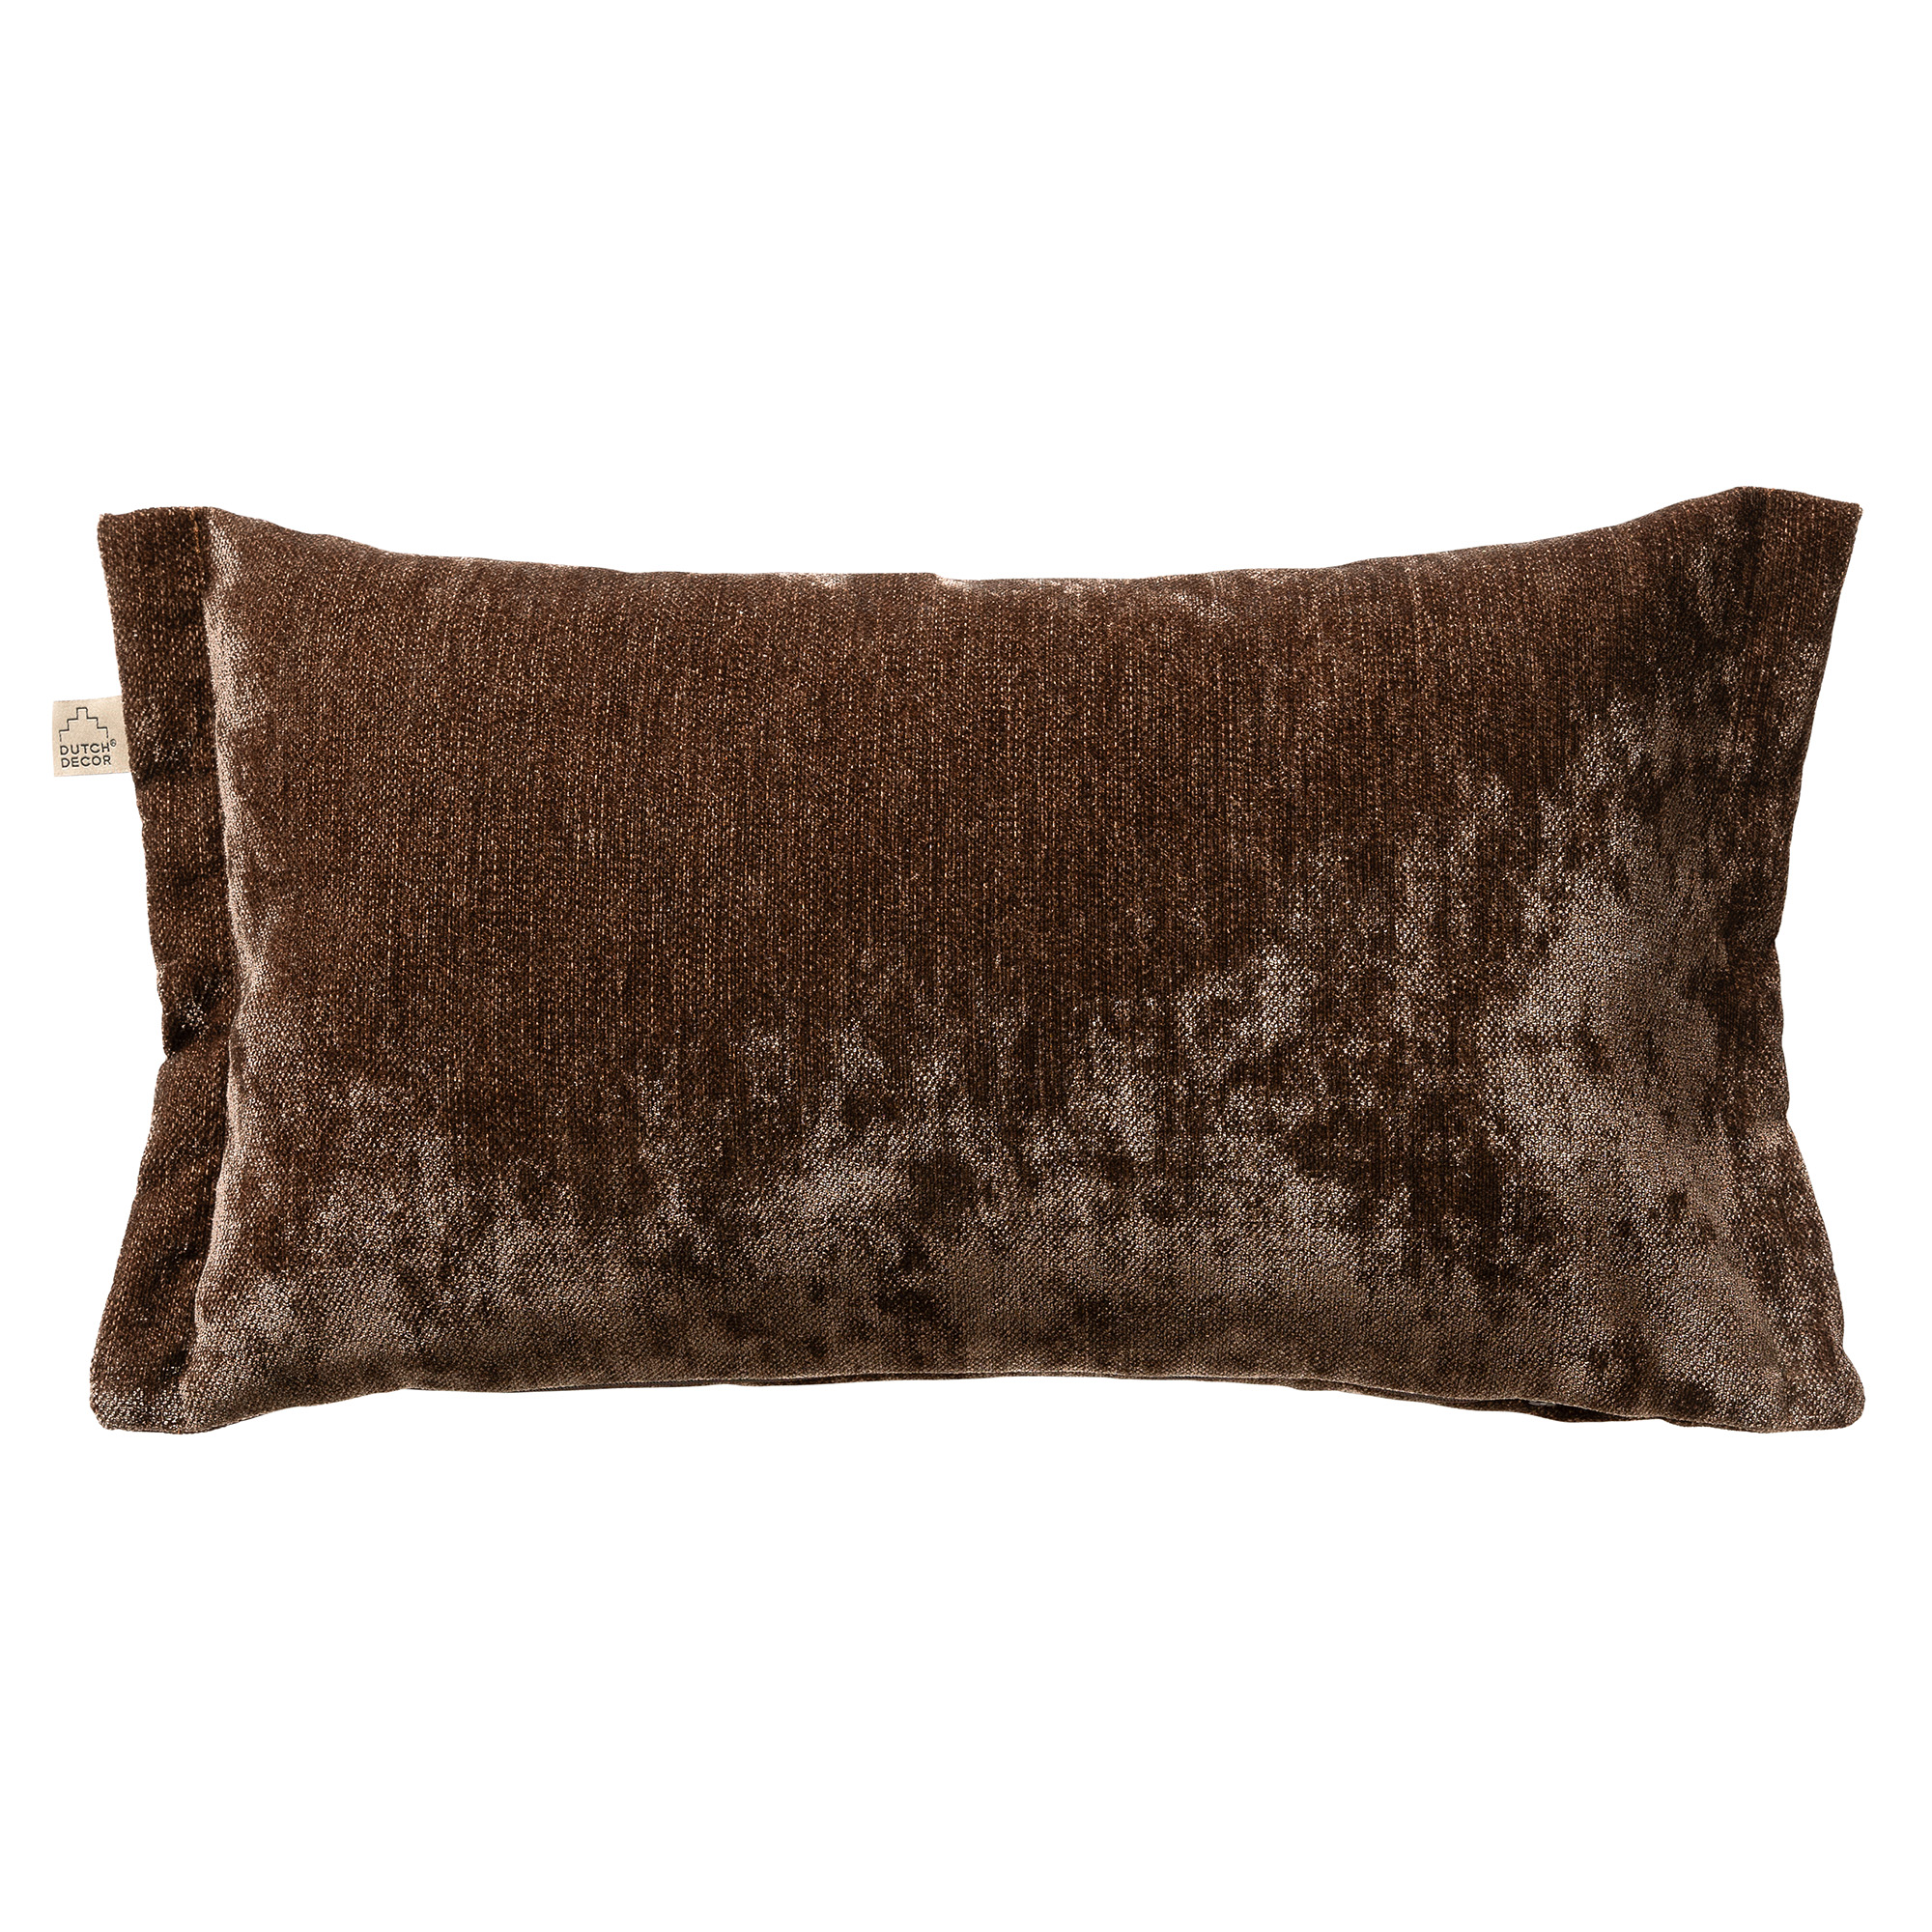 LEWIS - Cushion 30x50 cm - Chocolate Martini - brown